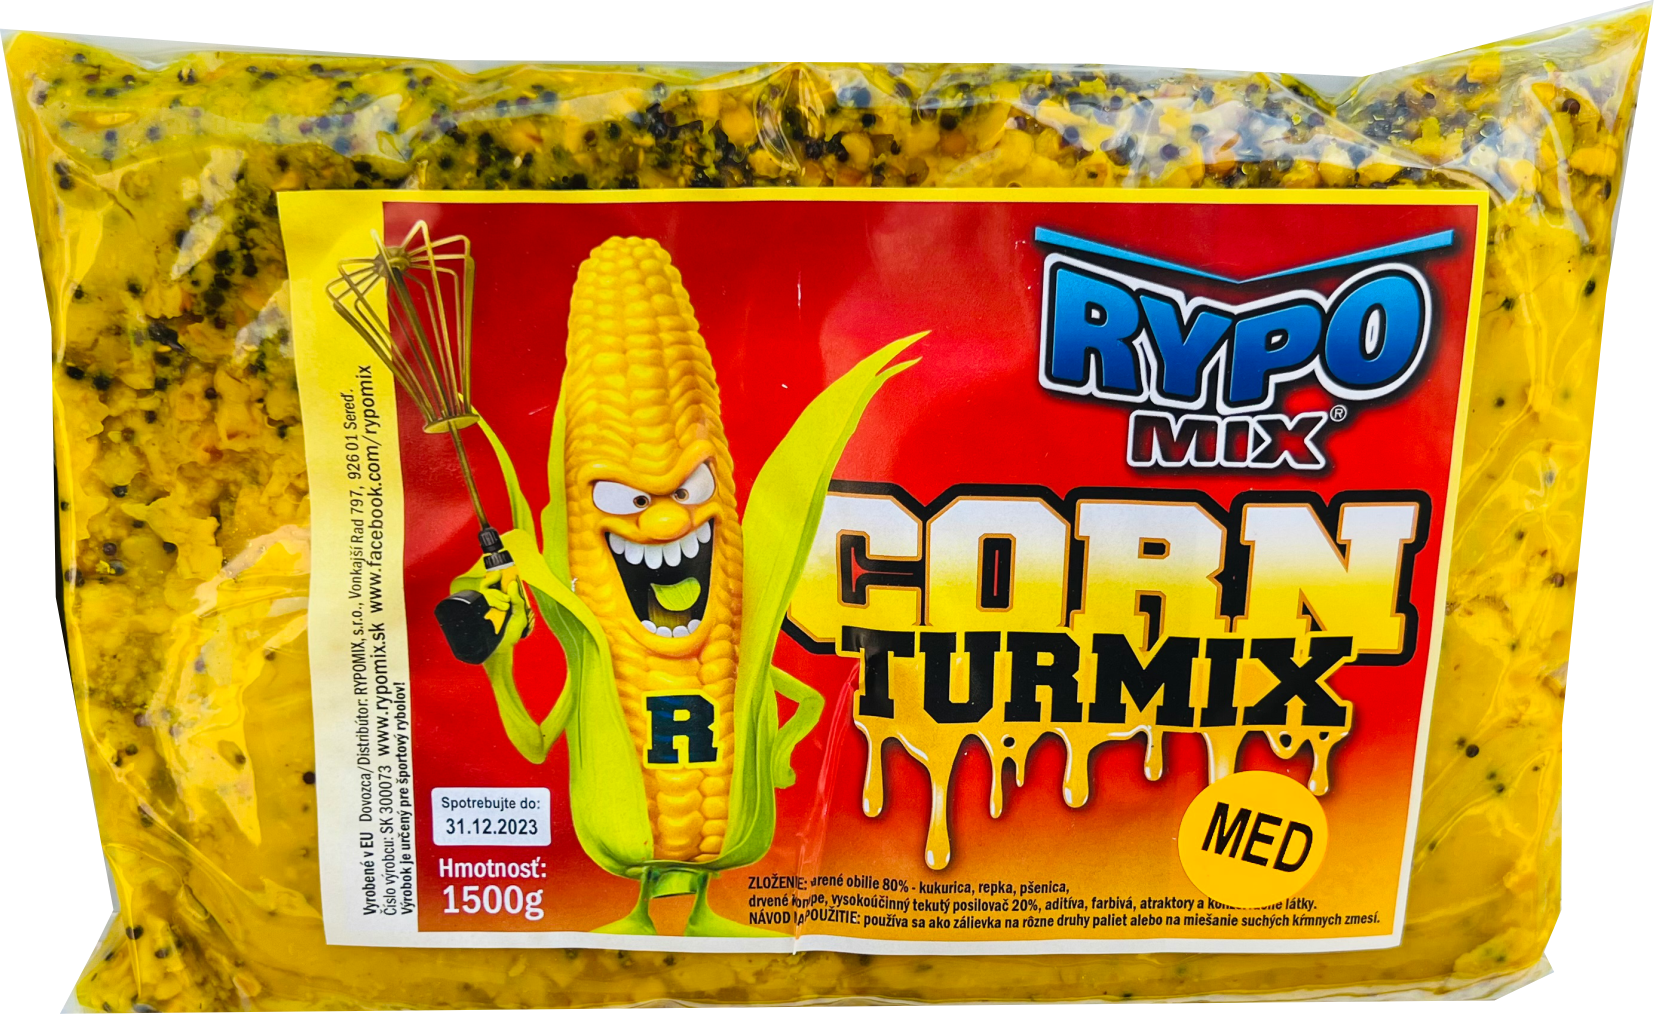 Corn Turmix Med